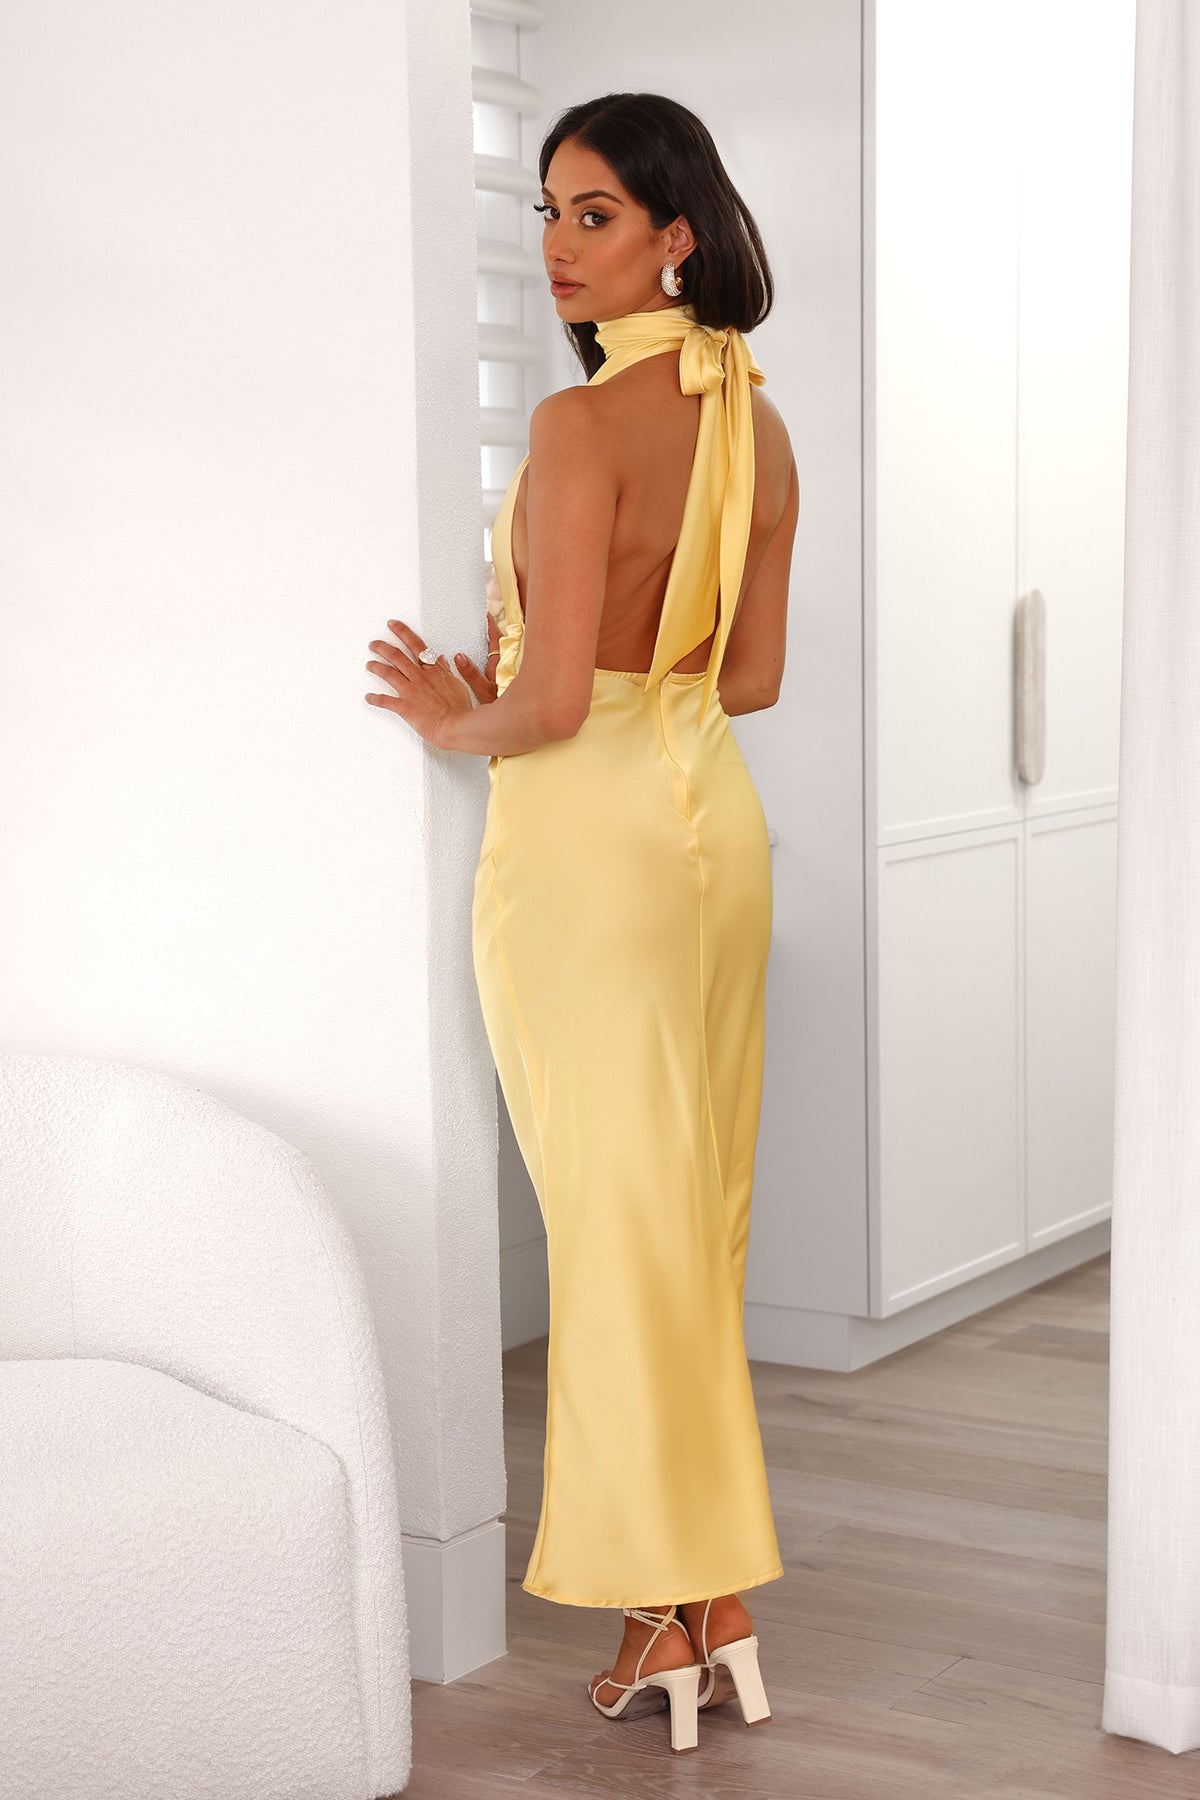 Shop Formal Dress - Beauty Of The Night Halter Satin Maxi Dress Yellow sixth image